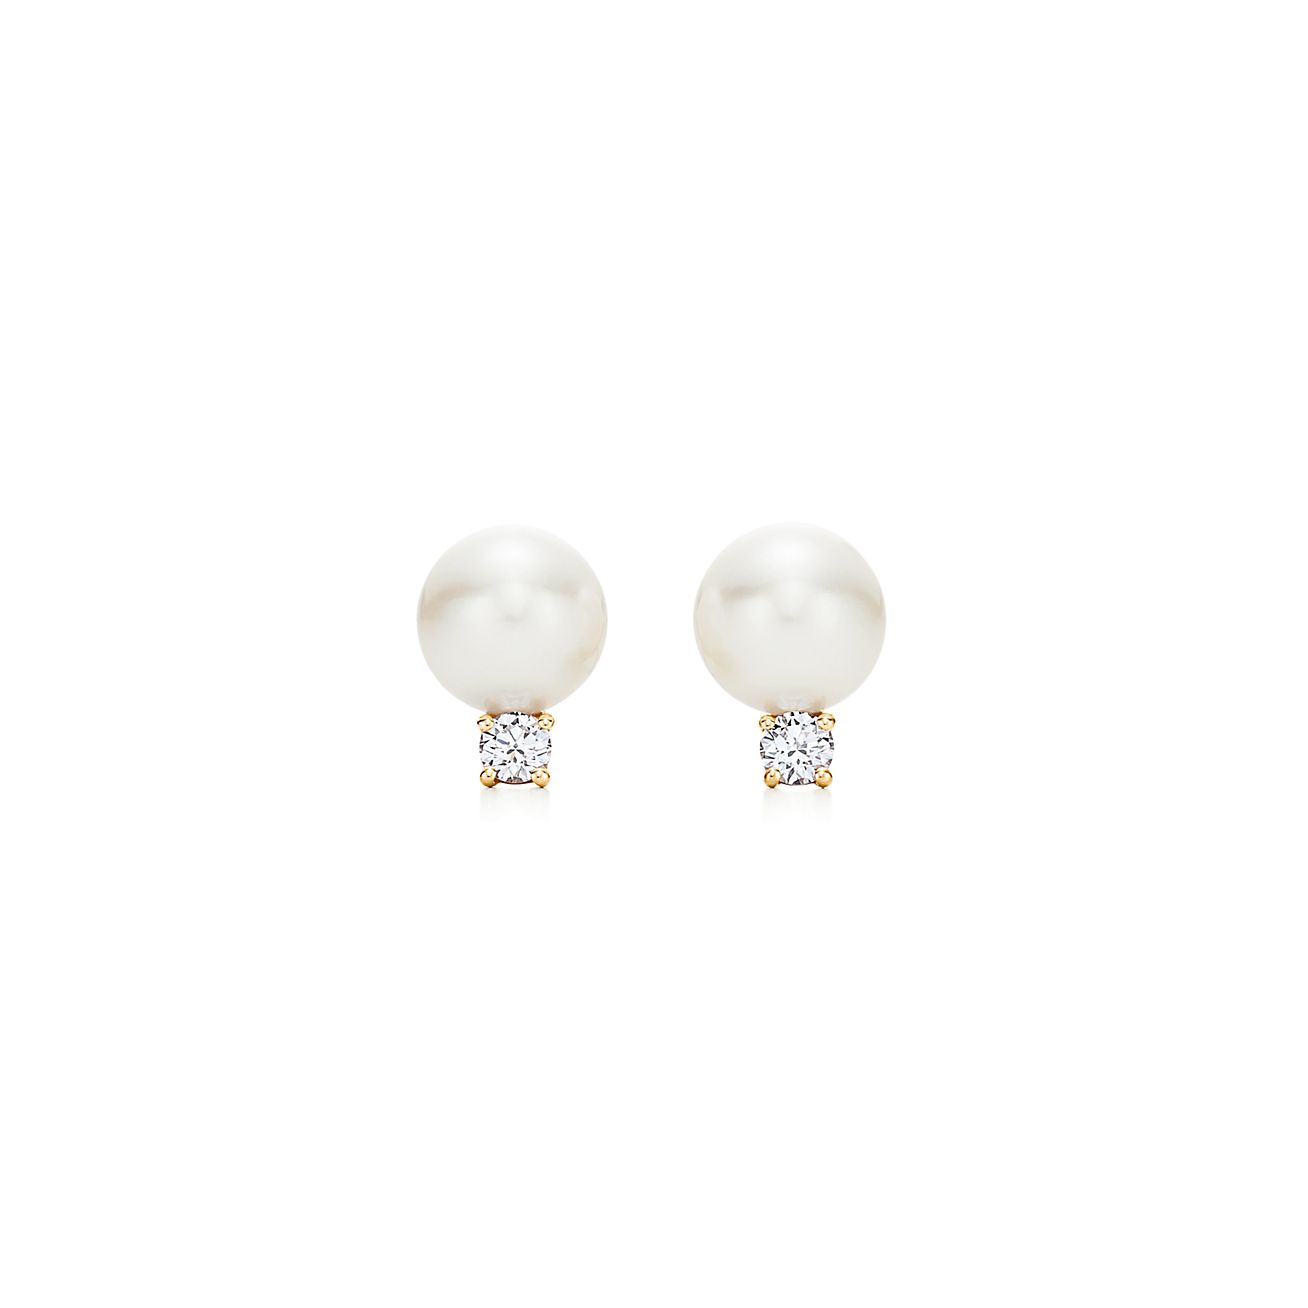 Tiffany Signature® Pearls earrings in 